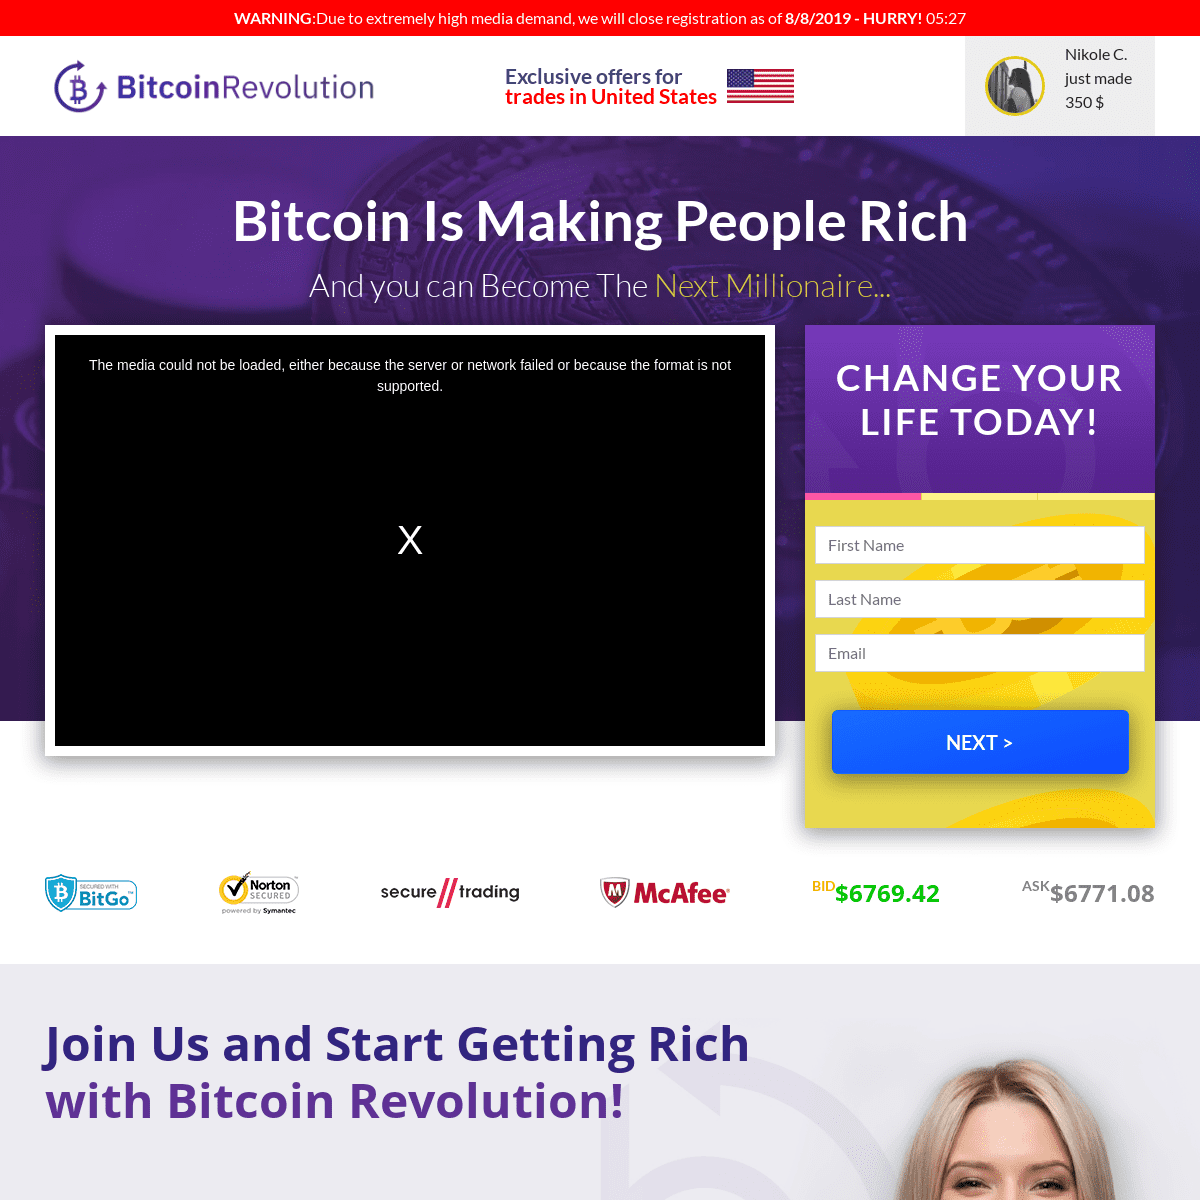 Bitcoin Revolution